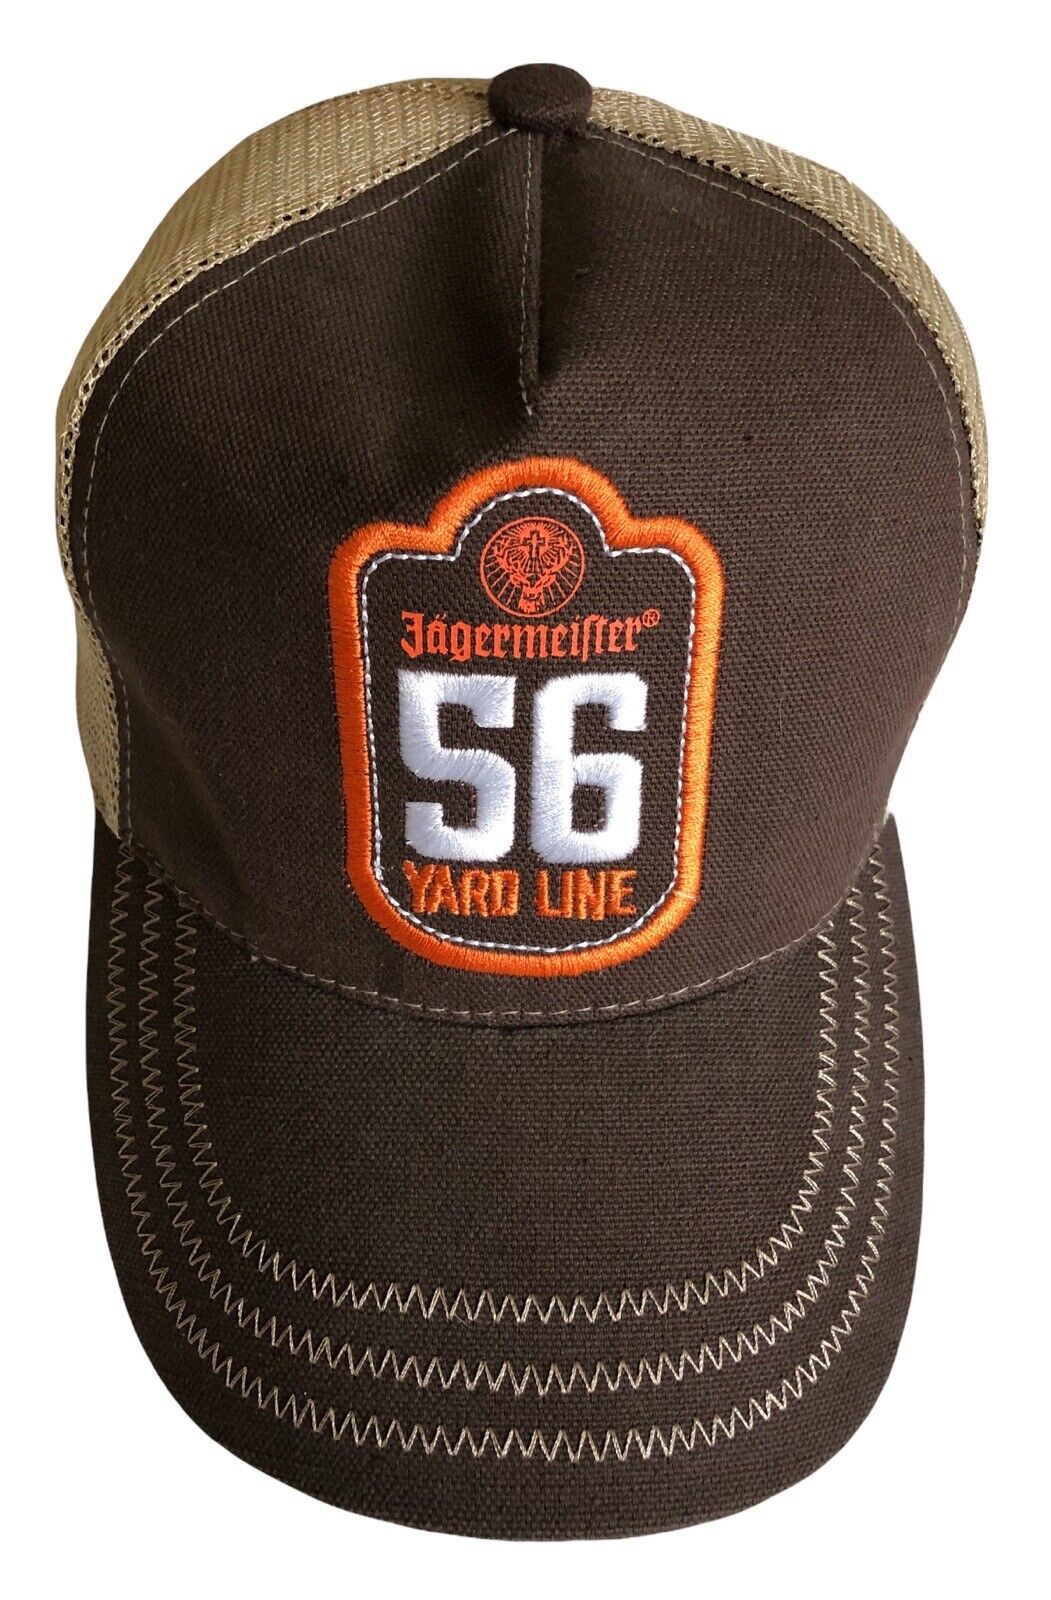 “JAGERMEISTER” Baseball Trucker Hat/Cap 56-Yard Line Mesh Brown Orange Snap-back